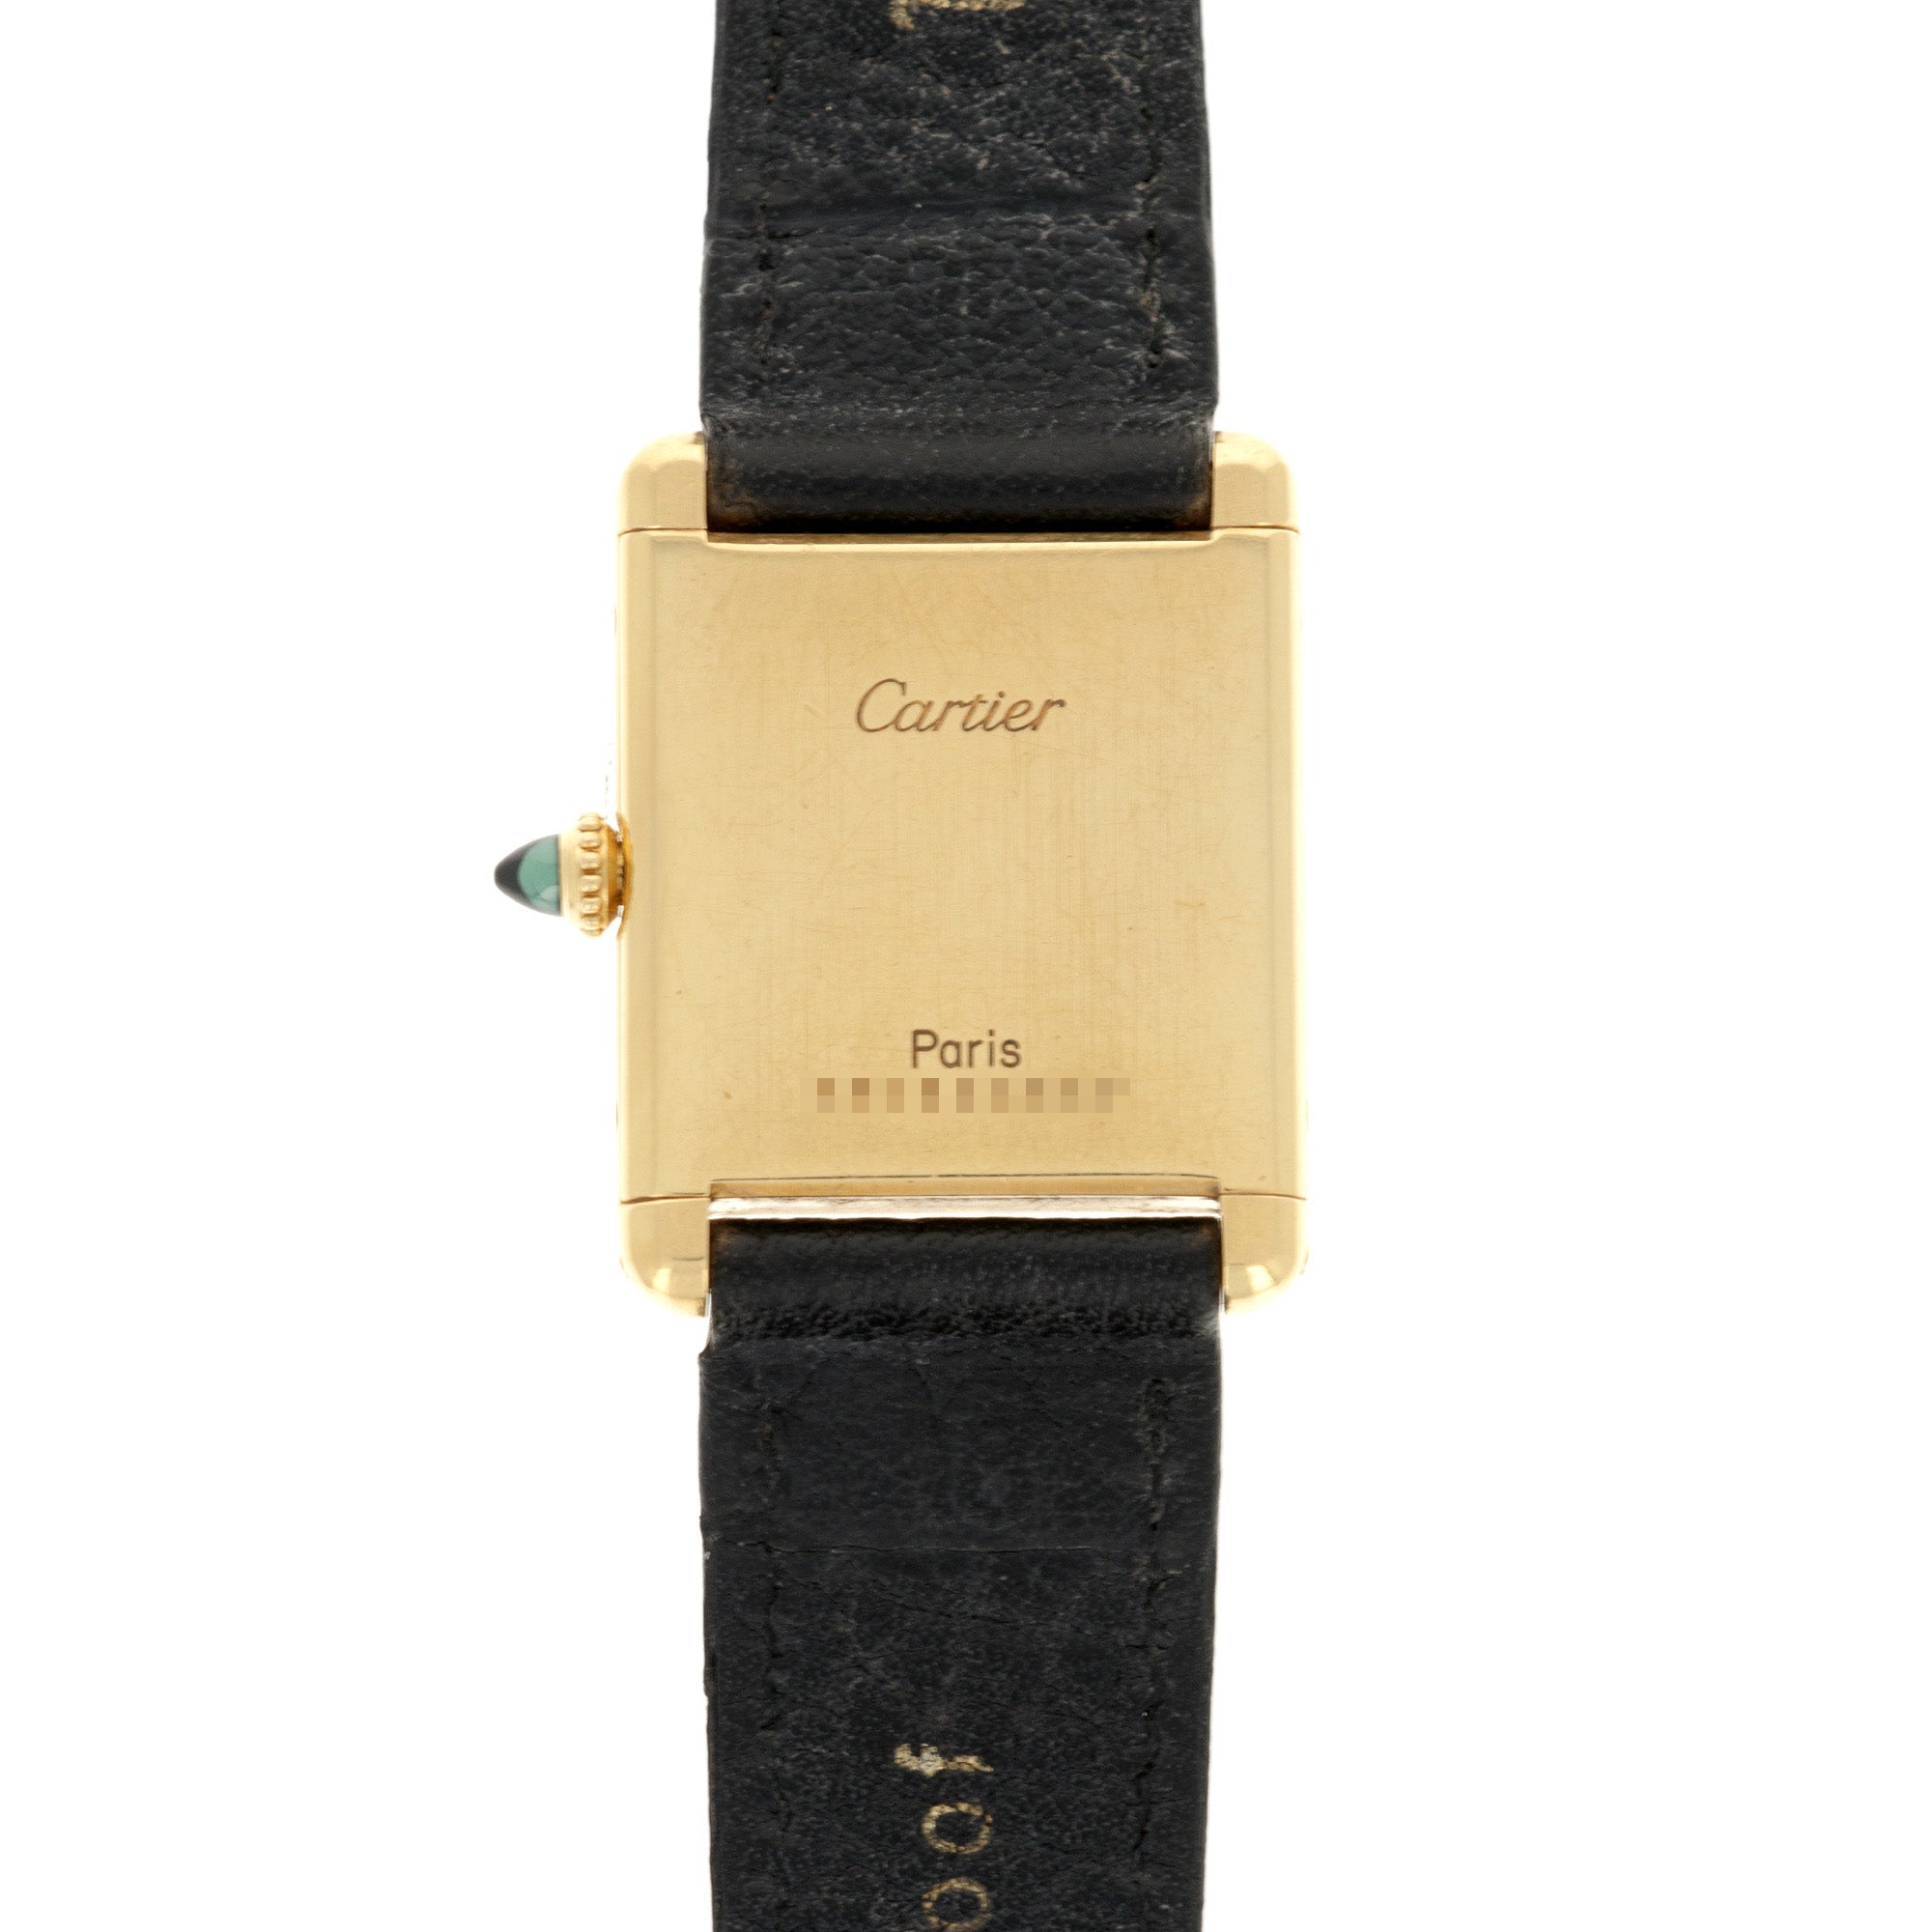 Cartier - Cartier Yellow Gold Tank Paris Mechanical Watch - The Keystone Watches